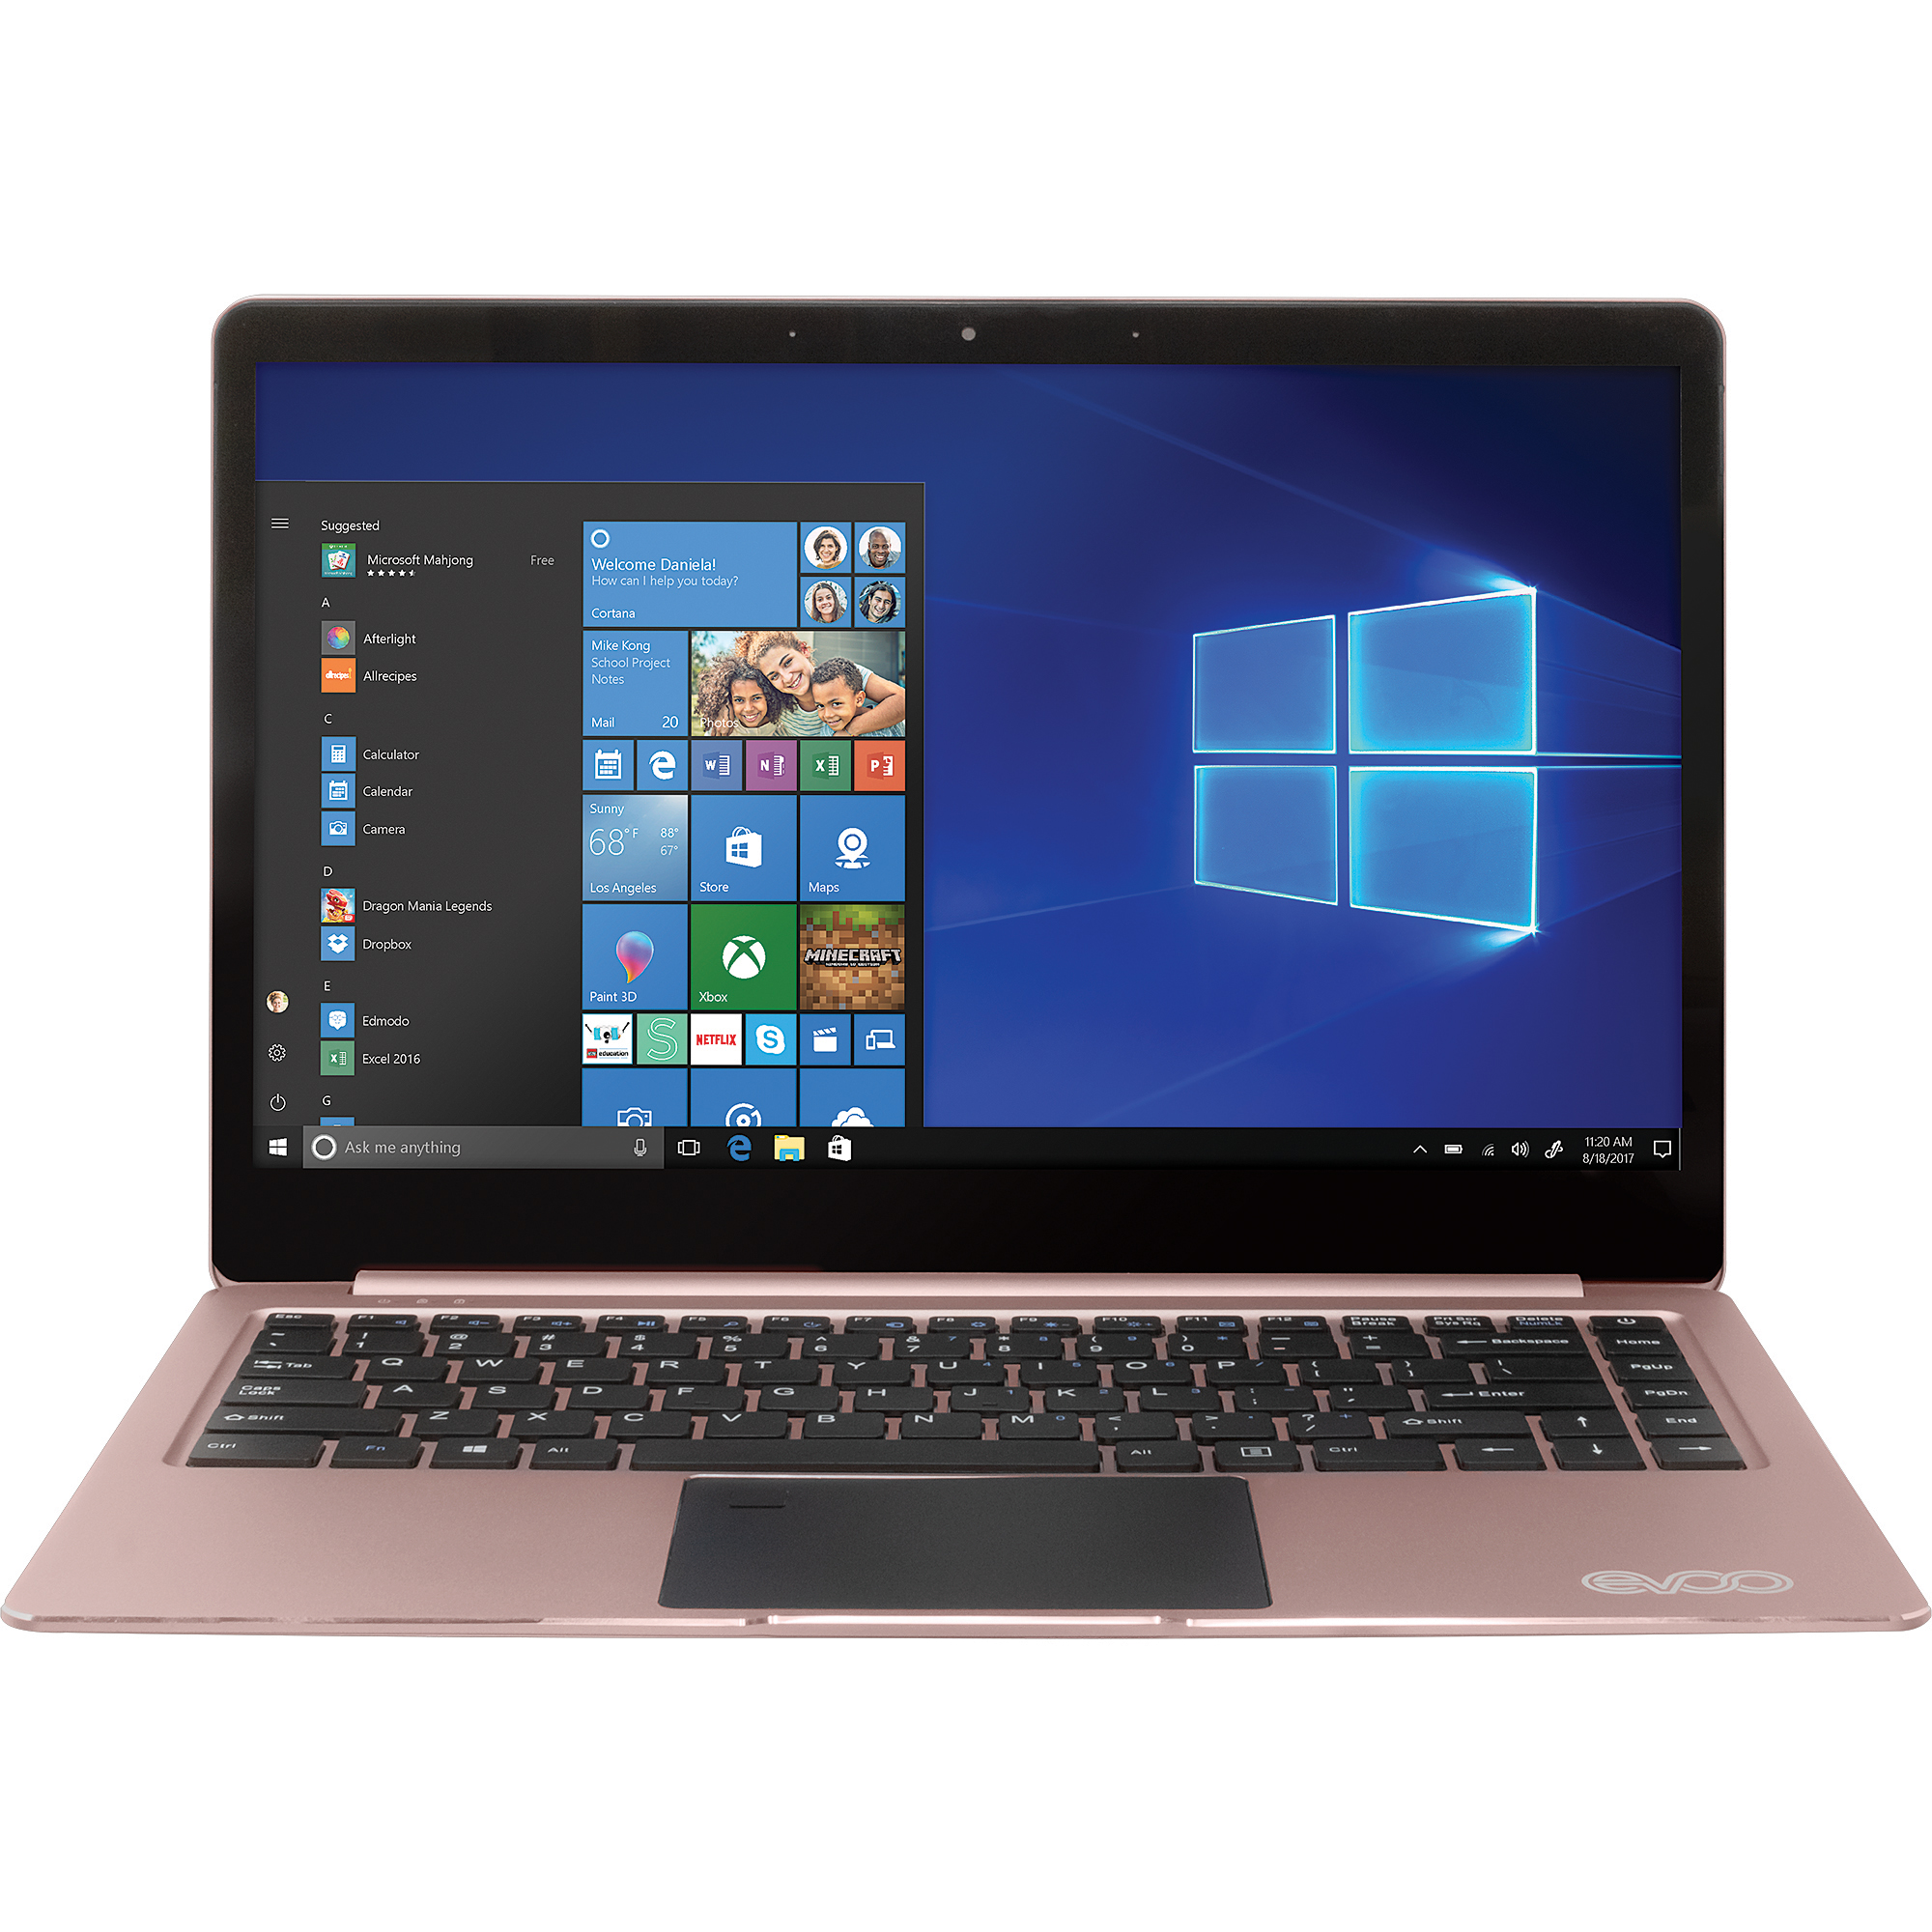 EVOO 14.1" Ultra Thin Laptop - Elite Series, Intel Celeron CPU, 4GB Memory, 32GB, Windows 10 S, Windows Hello (Fingerprint Scanner), Rose Gold - image 4 of 5